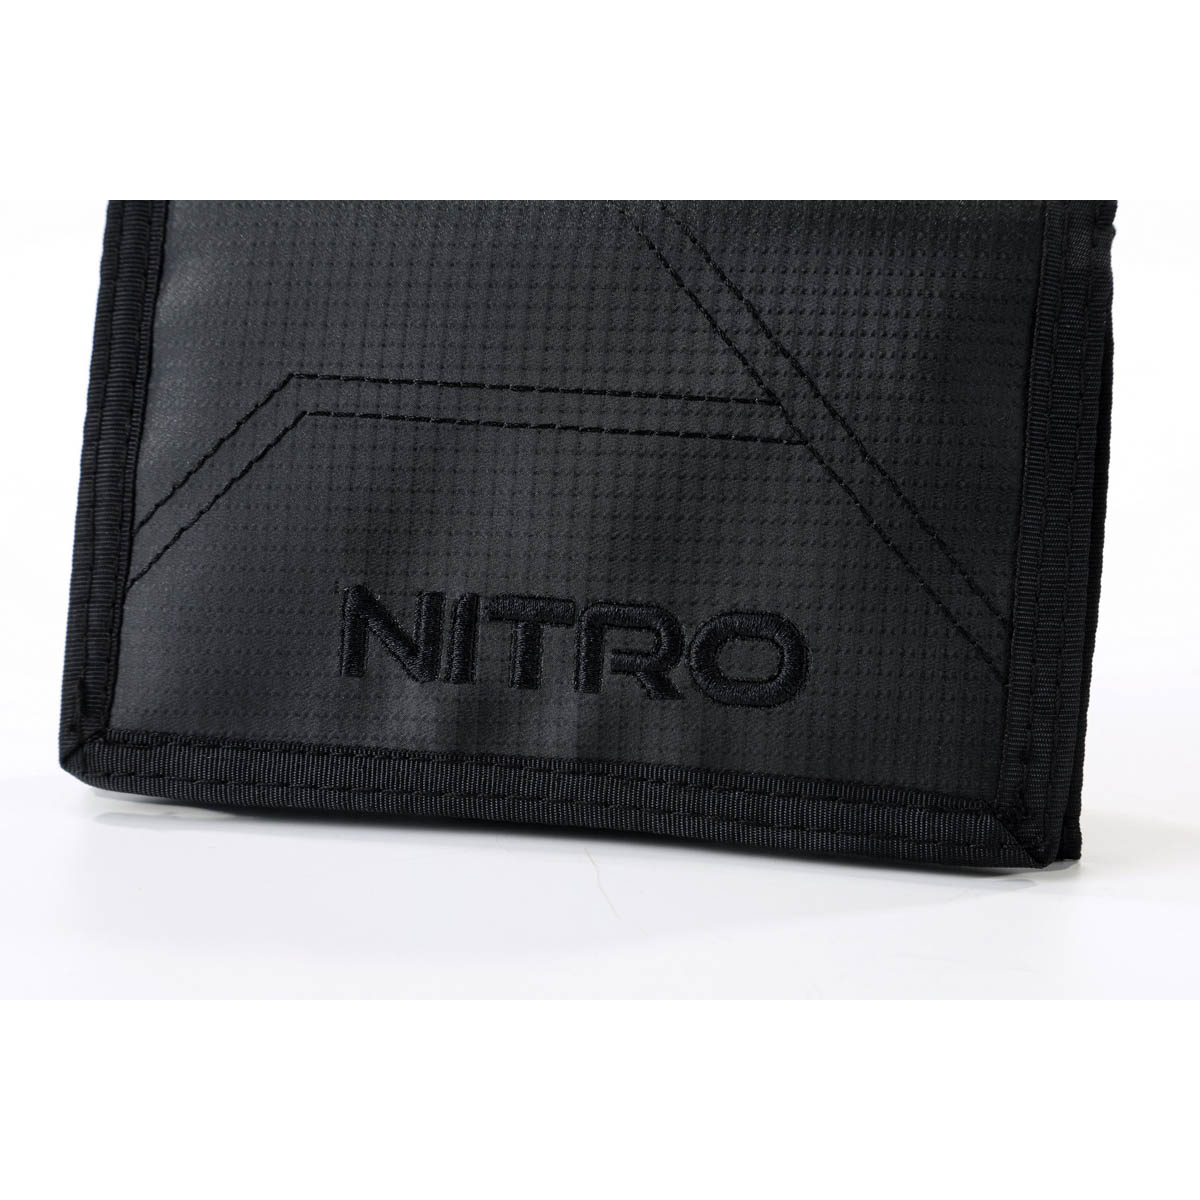 Nitro Geldbeutel Wallet - Nitrobags-Shop online bestellen | Nitrobags Shop